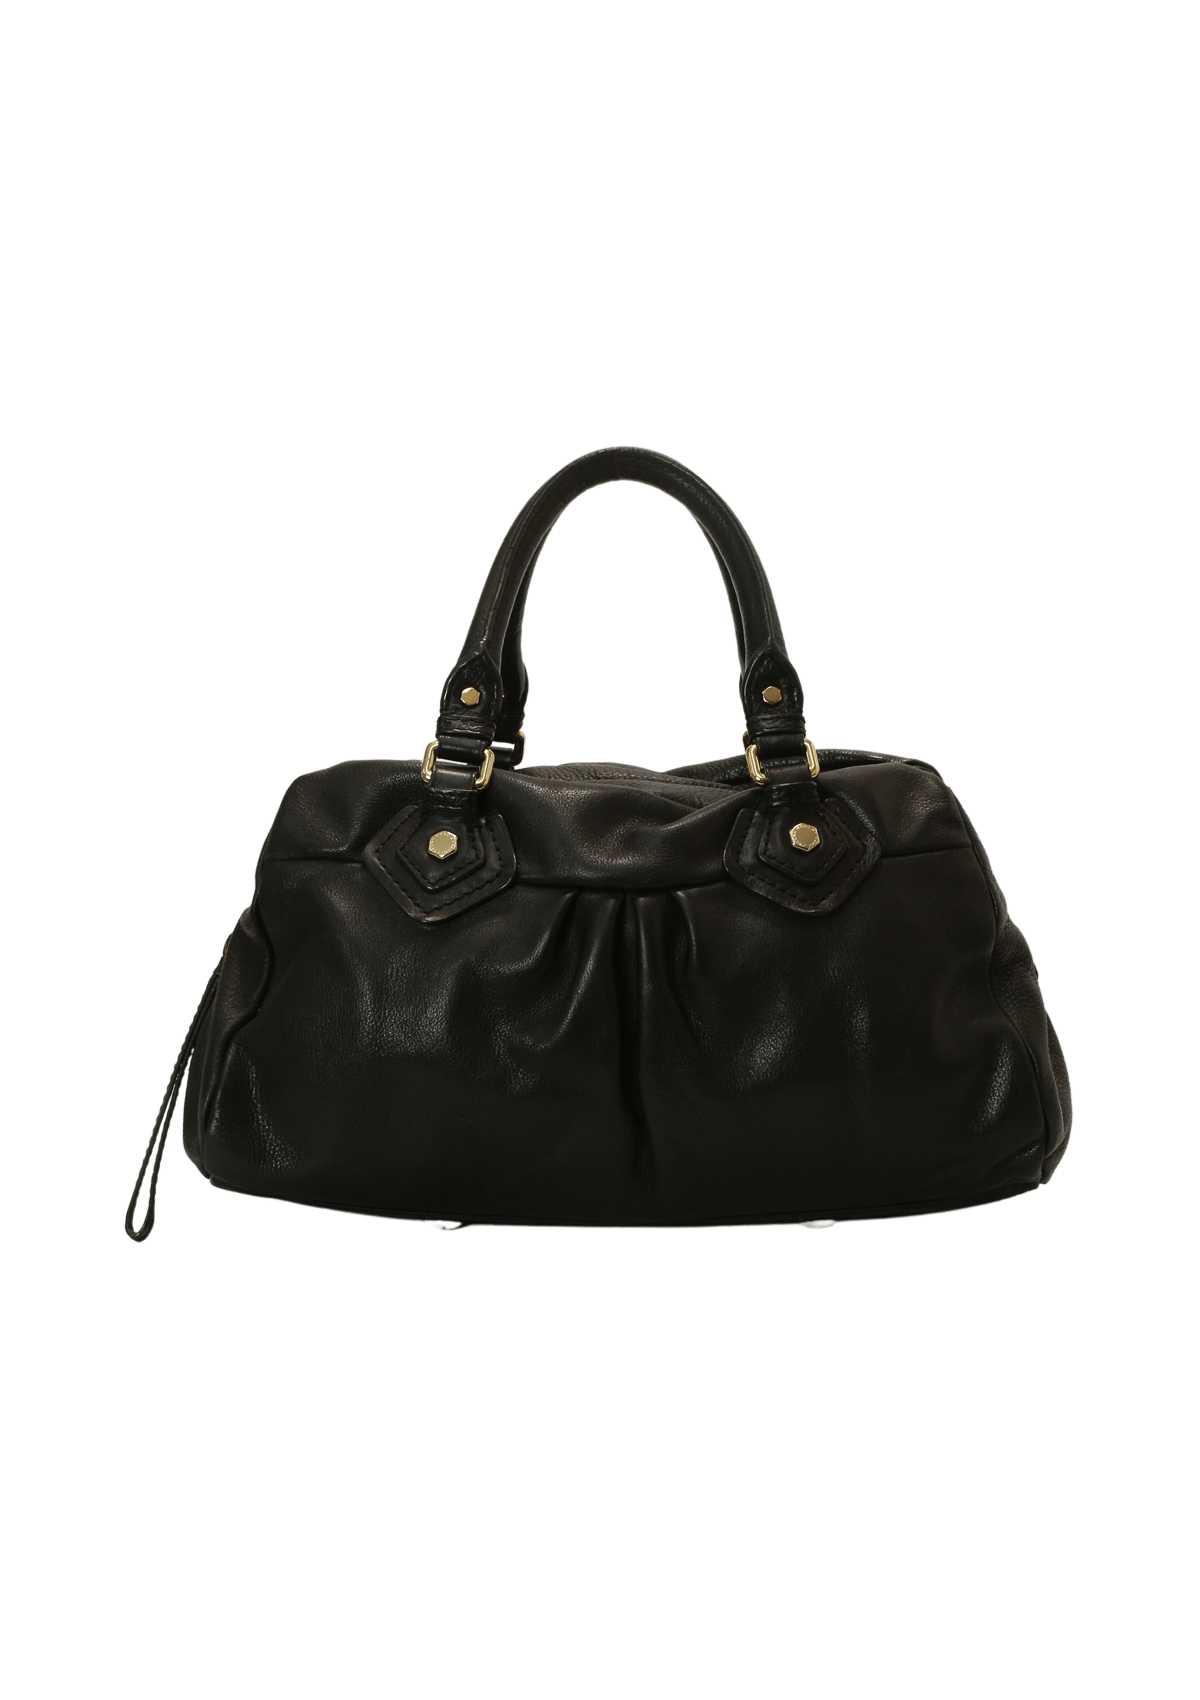 Michael Kors Hamilton leather shearling fur trim bag black lock